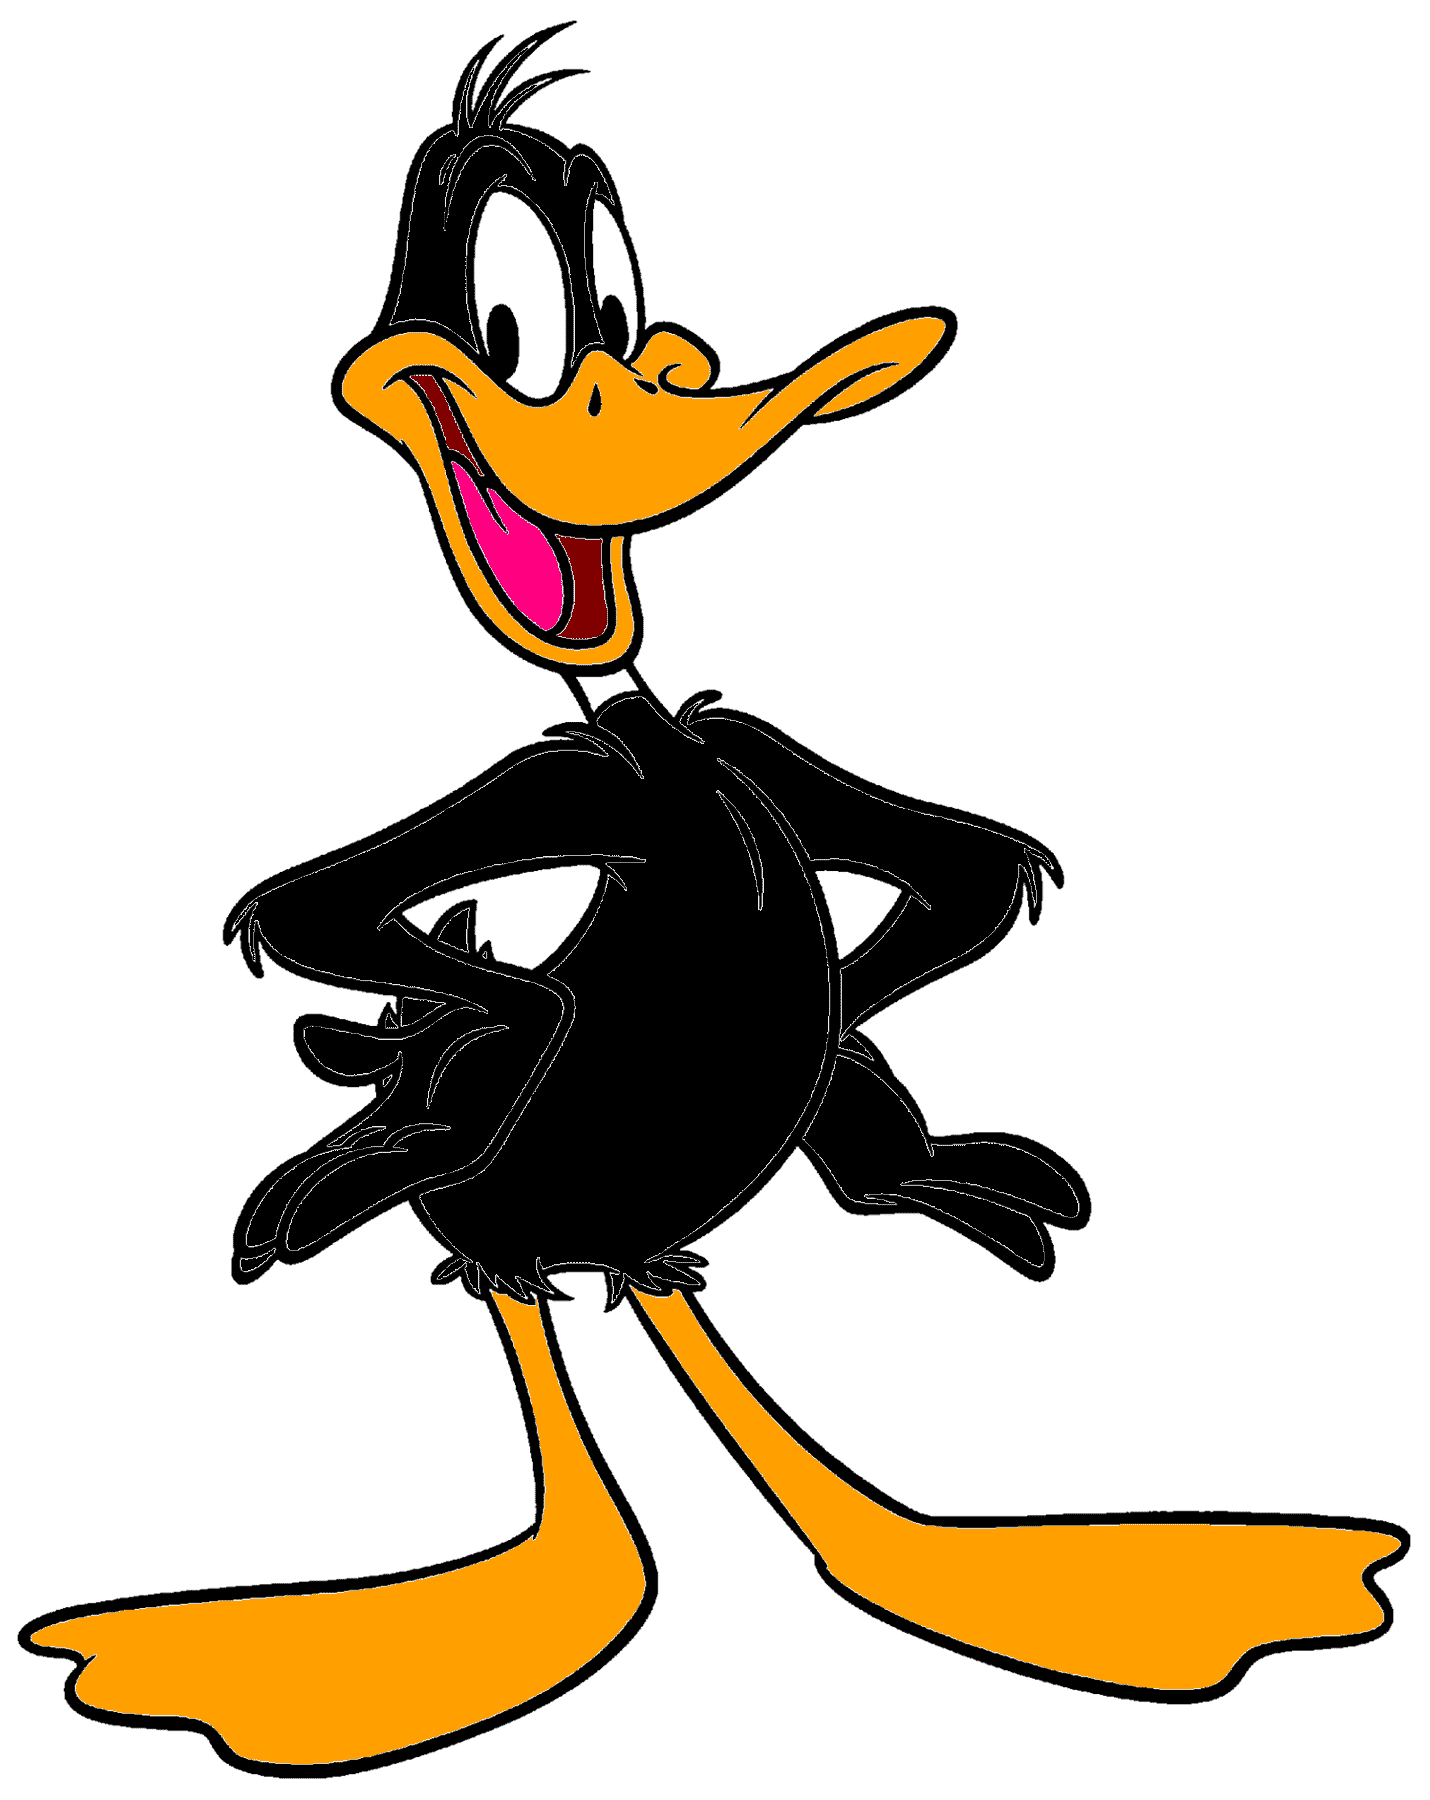 Daffy Duck by LionKingRulez P